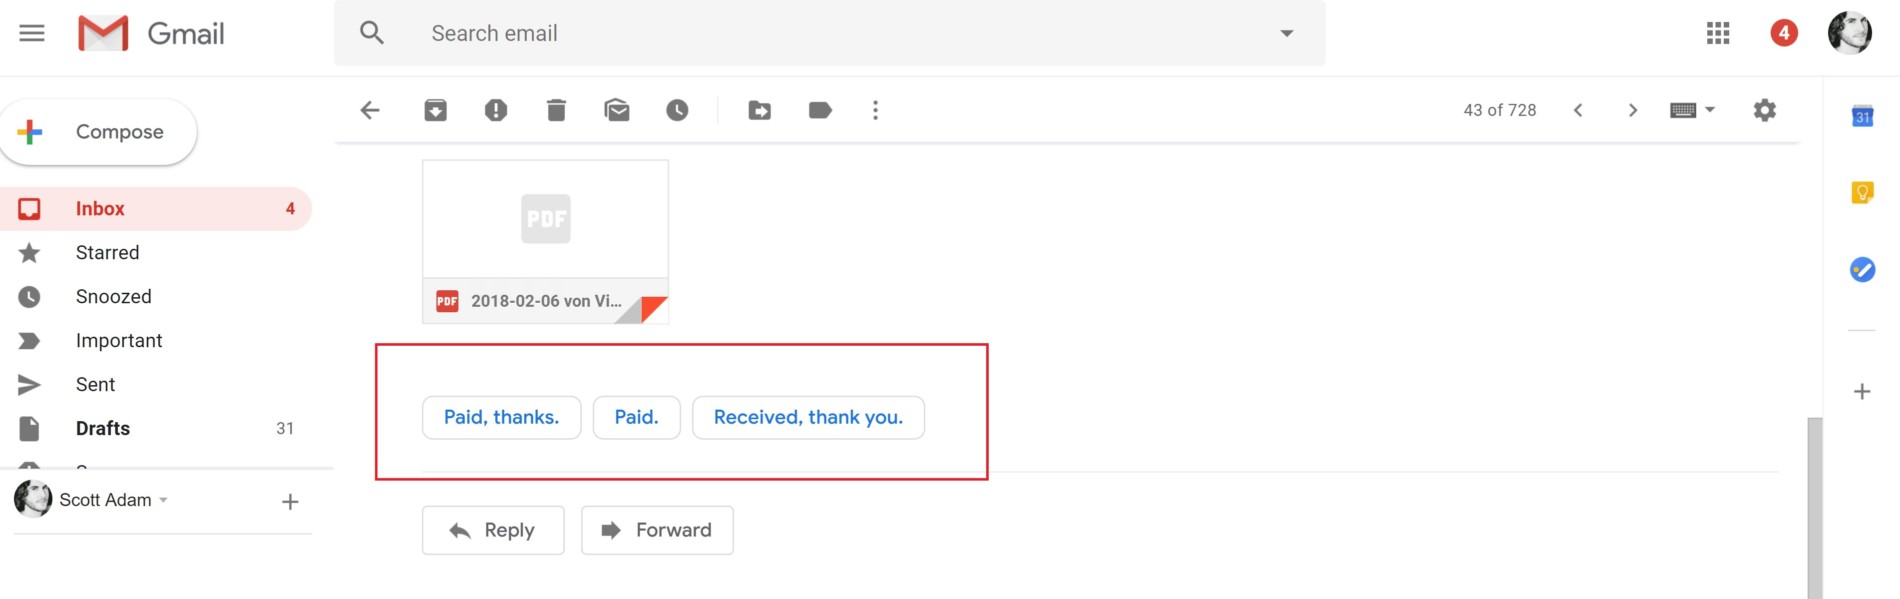 Google Gmail smart replies - new gmail